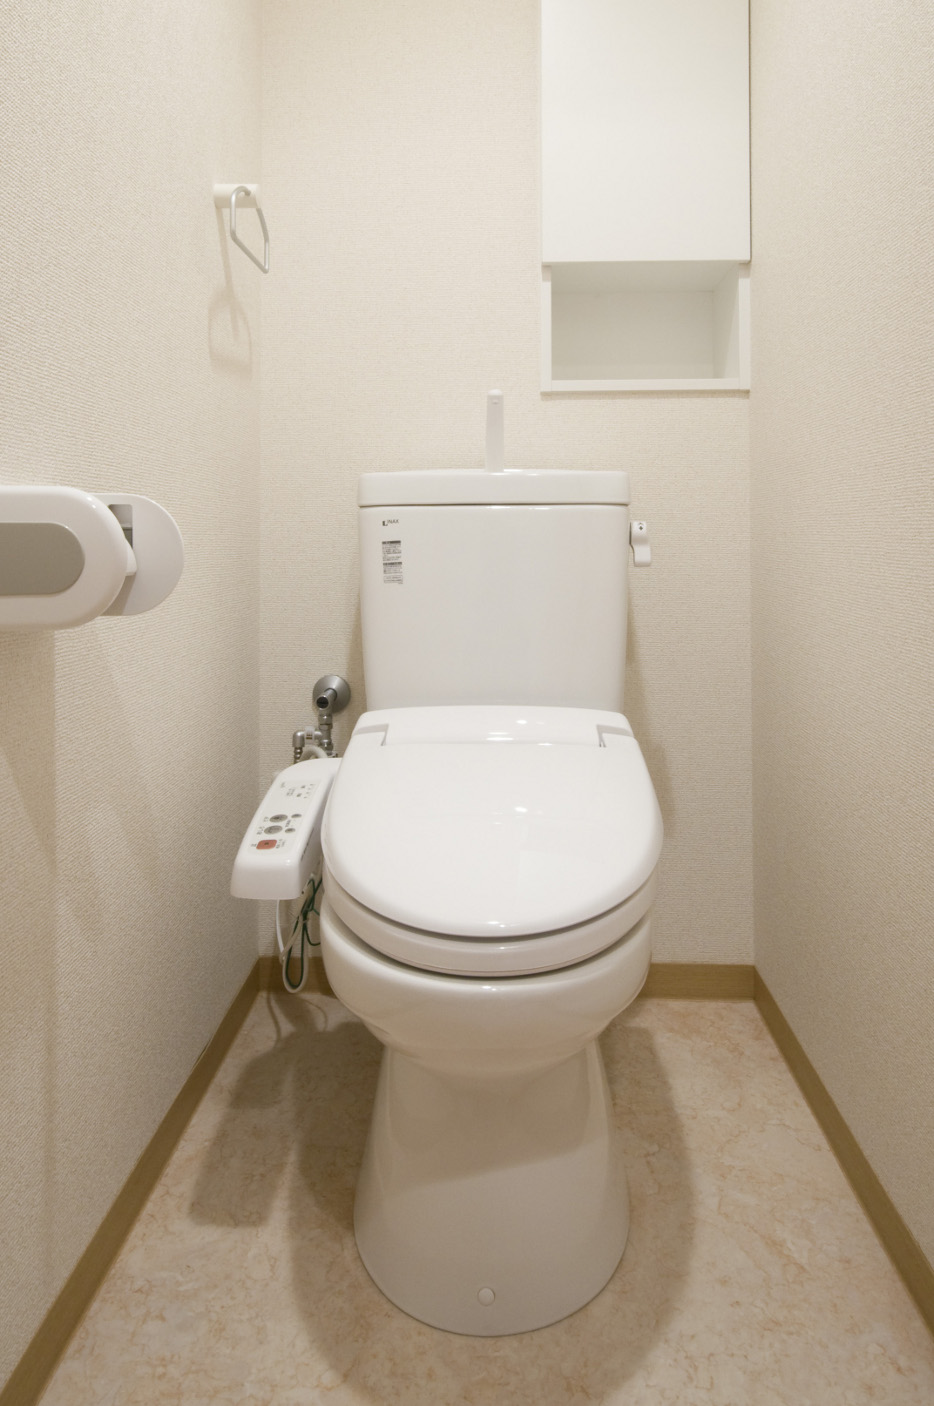 Toilet. Shower toilet Heating toilet seat With storage shelf 24-hour ventilation